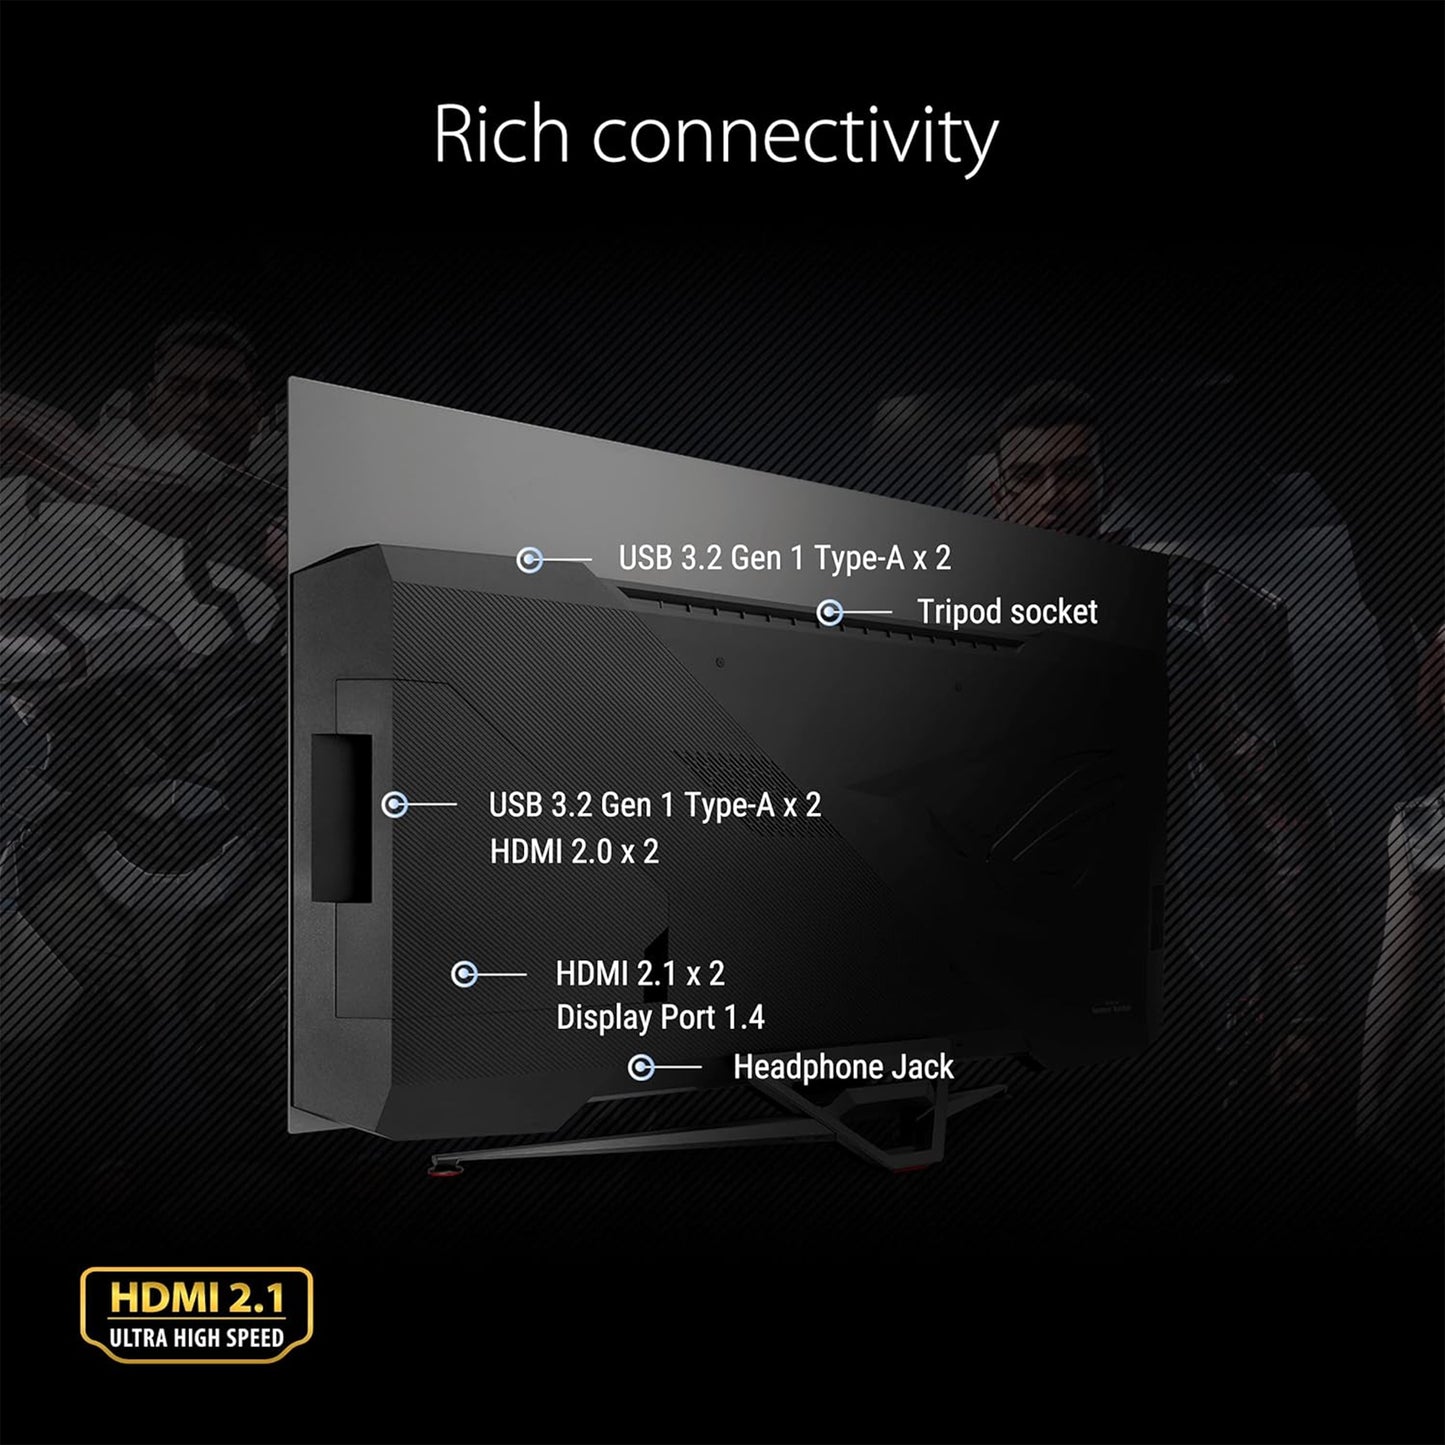 ASUS ROG Swift 47.5” 4K OLED Gaming Monitor (PG48UQ)- UHD (3840 x 2160), 138Hz, 0.1ms, HDMI 2.1, True 10 bit, DCI-P3 98%, G-SYNC Compatible, DisplayPort, USB, Console Ready, Remote Control, Anti-Glare